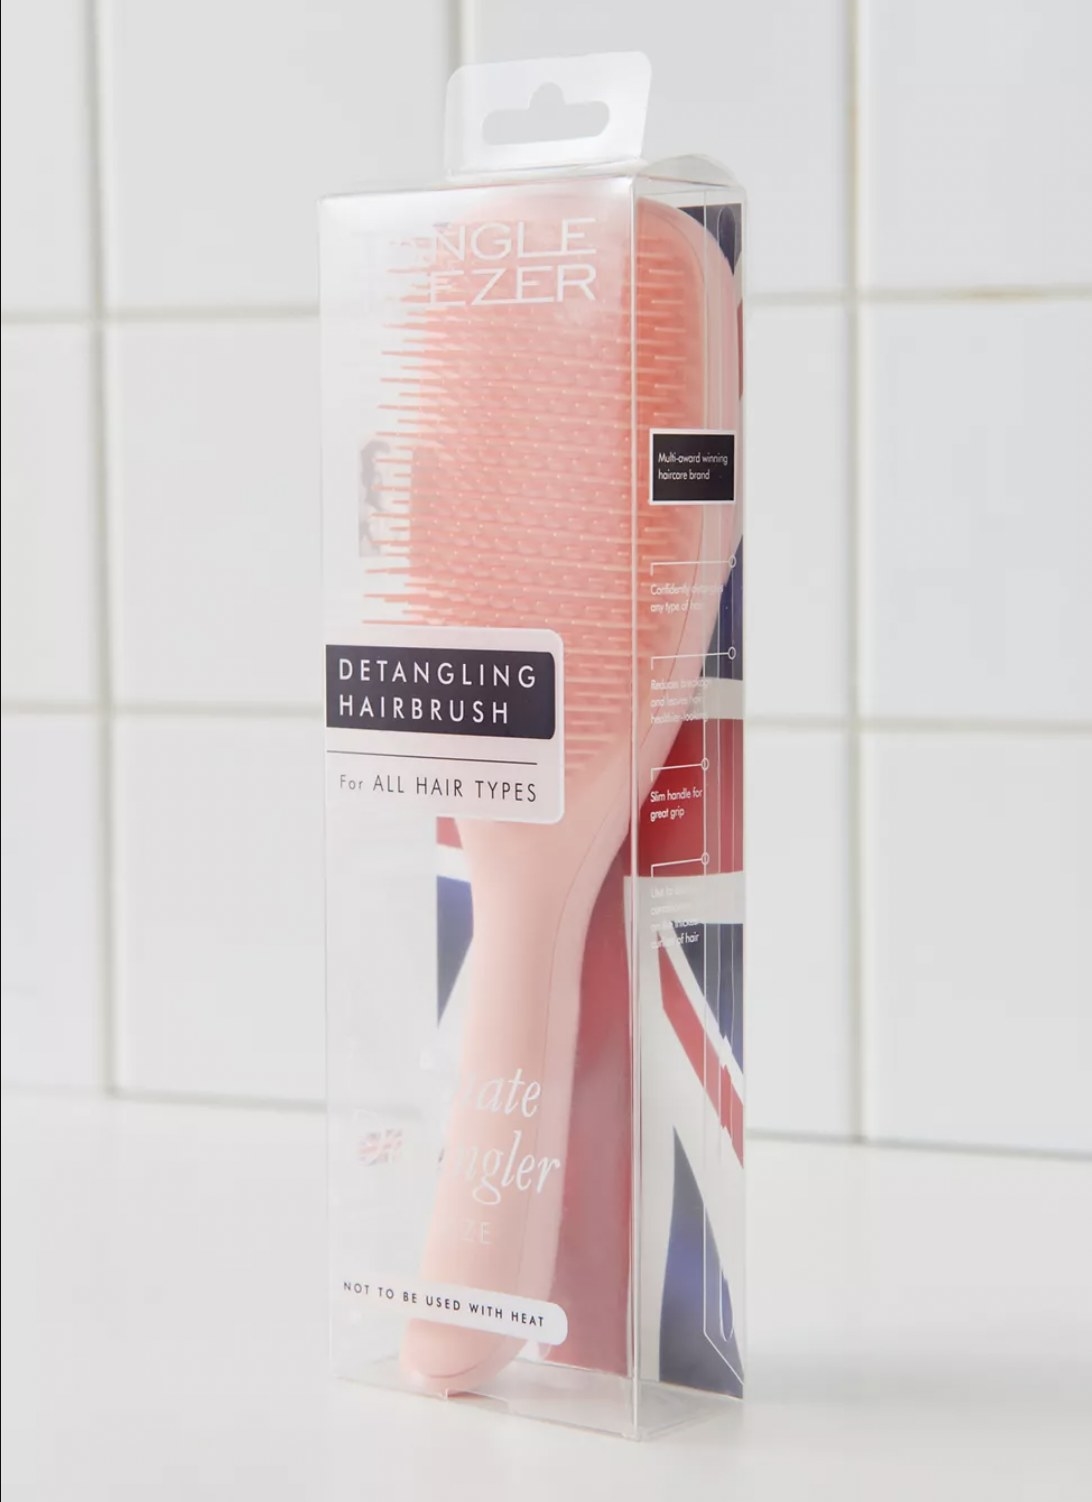 A pink detangling brush in packaging